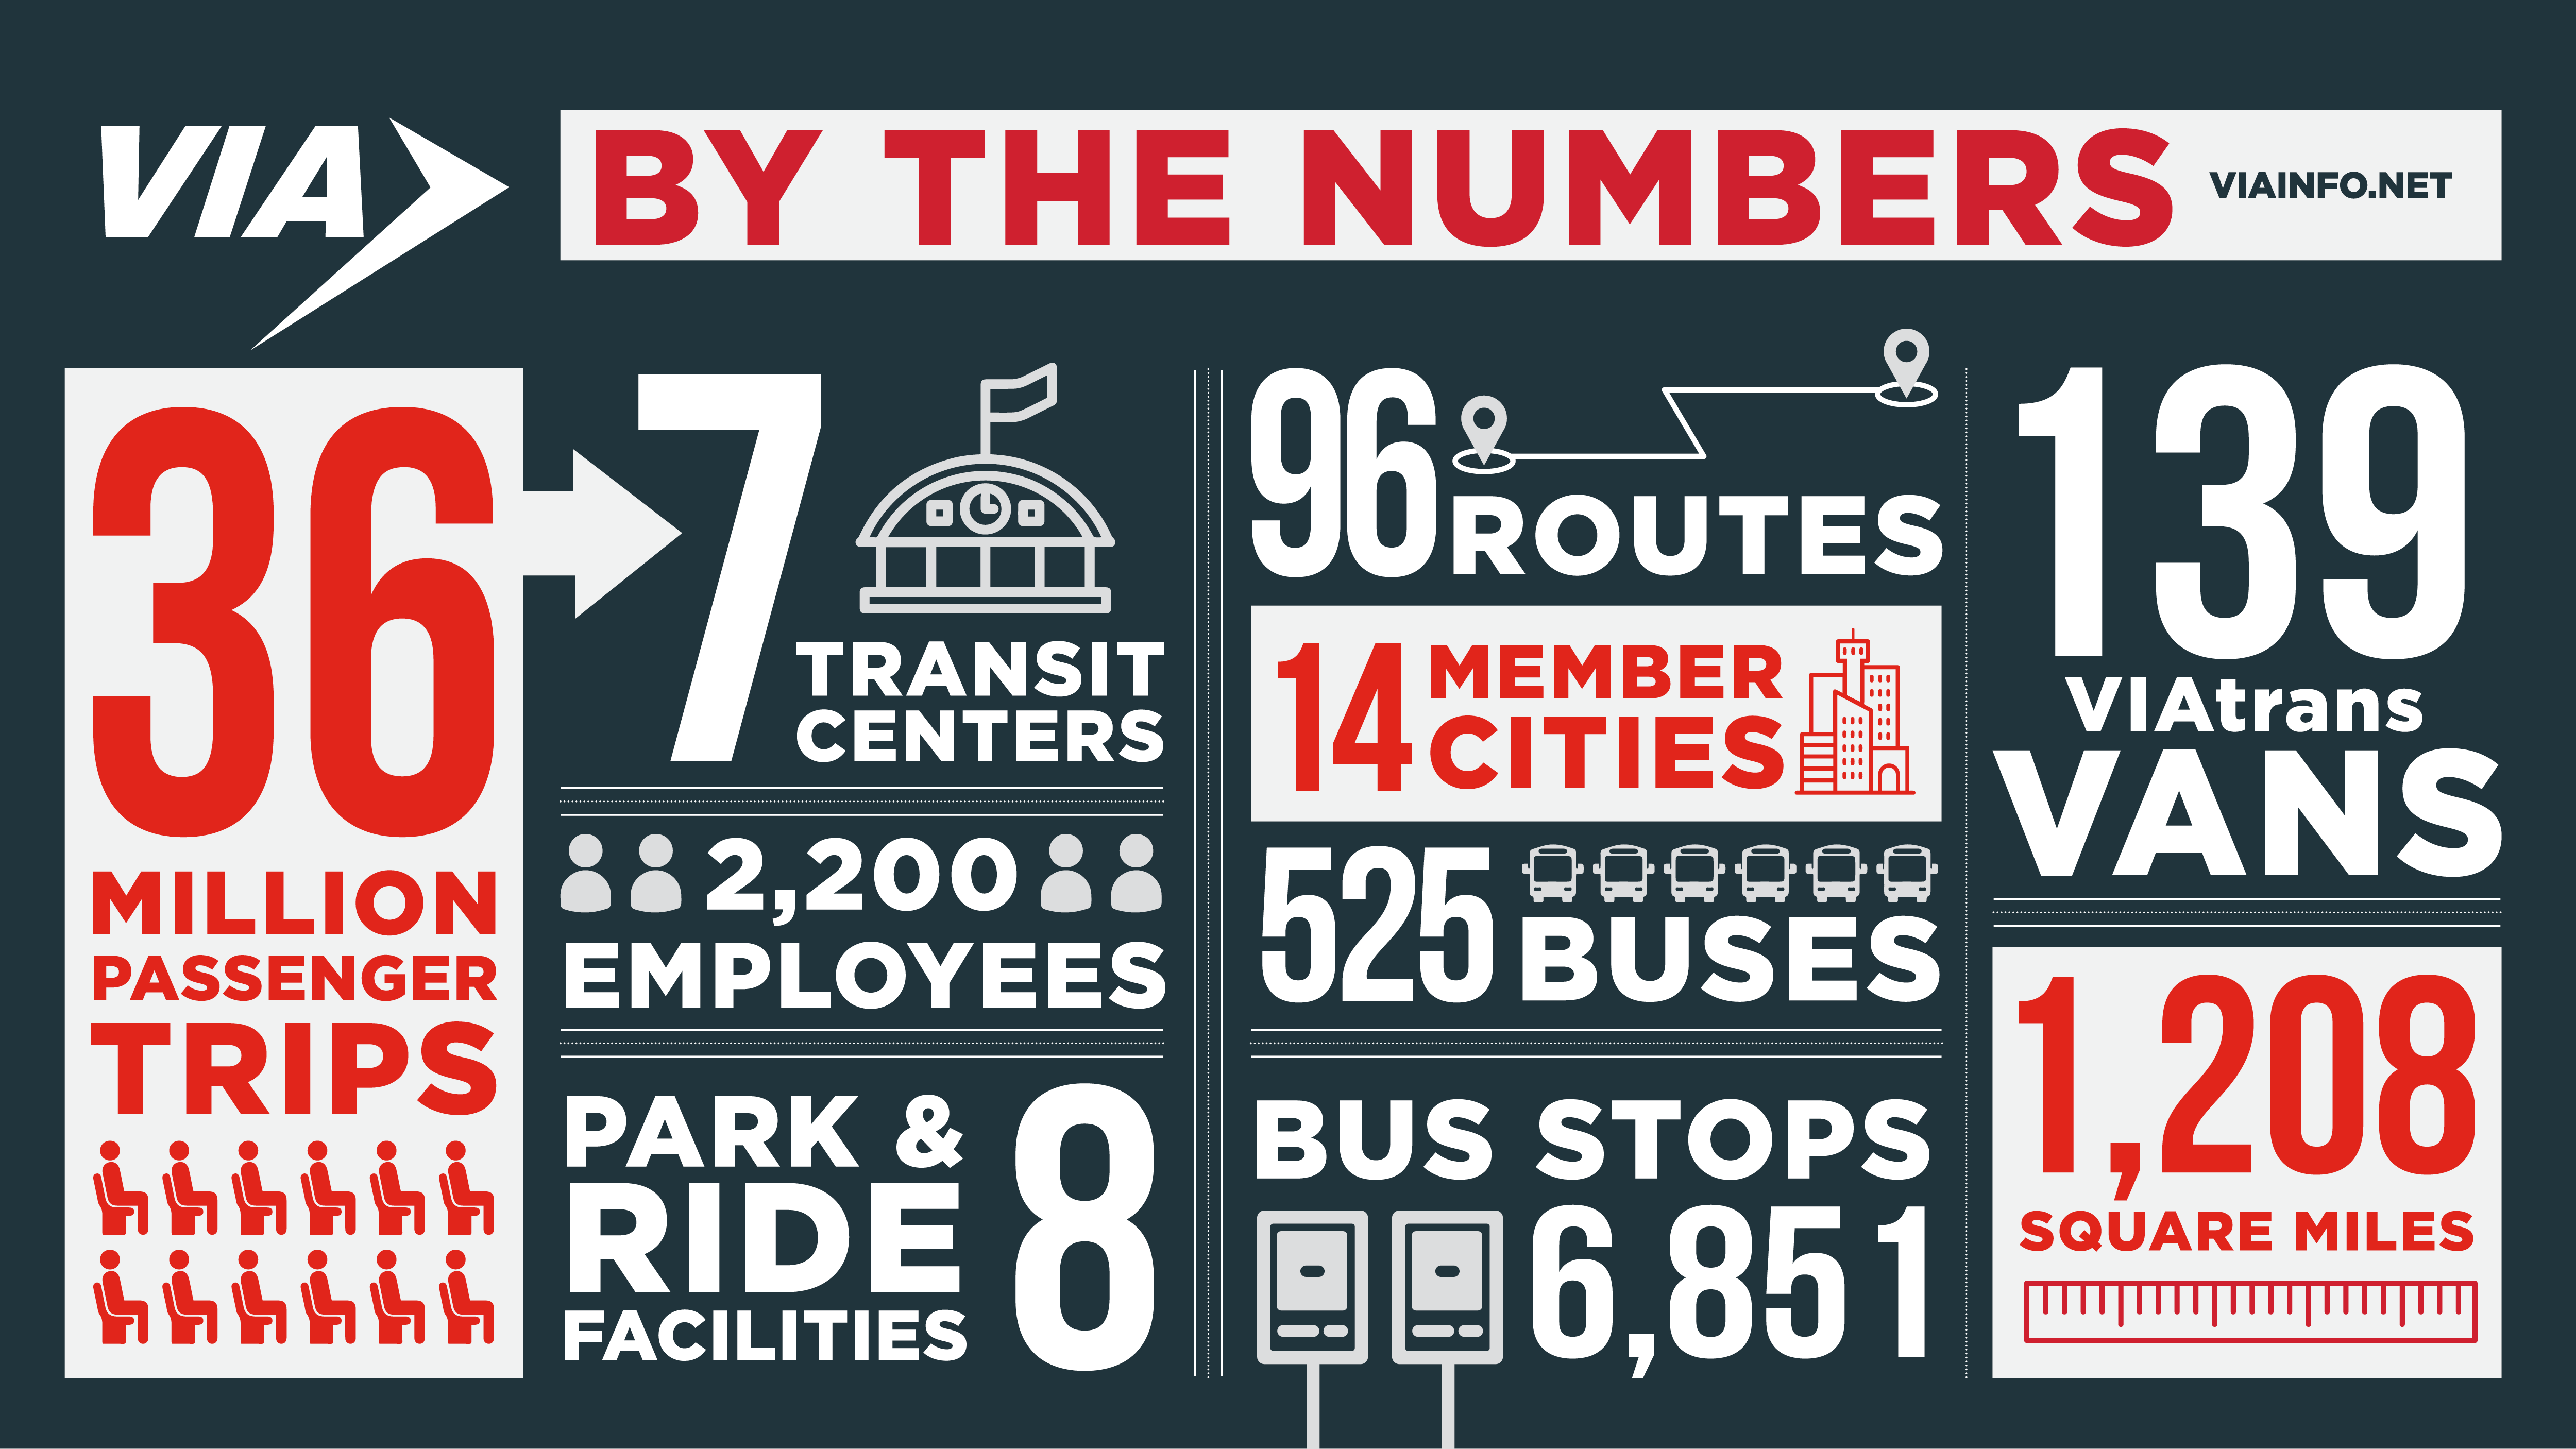 Graphic: VIA Facts and Figures, 36 million passenger trips; 7 transit centers; 2,200 employees; 8 park & ride facilities; 96 routes; 14 member cities; 525 buses; 6,851 bus stops; 139 VIAtrans vans, 1,208 square miles.